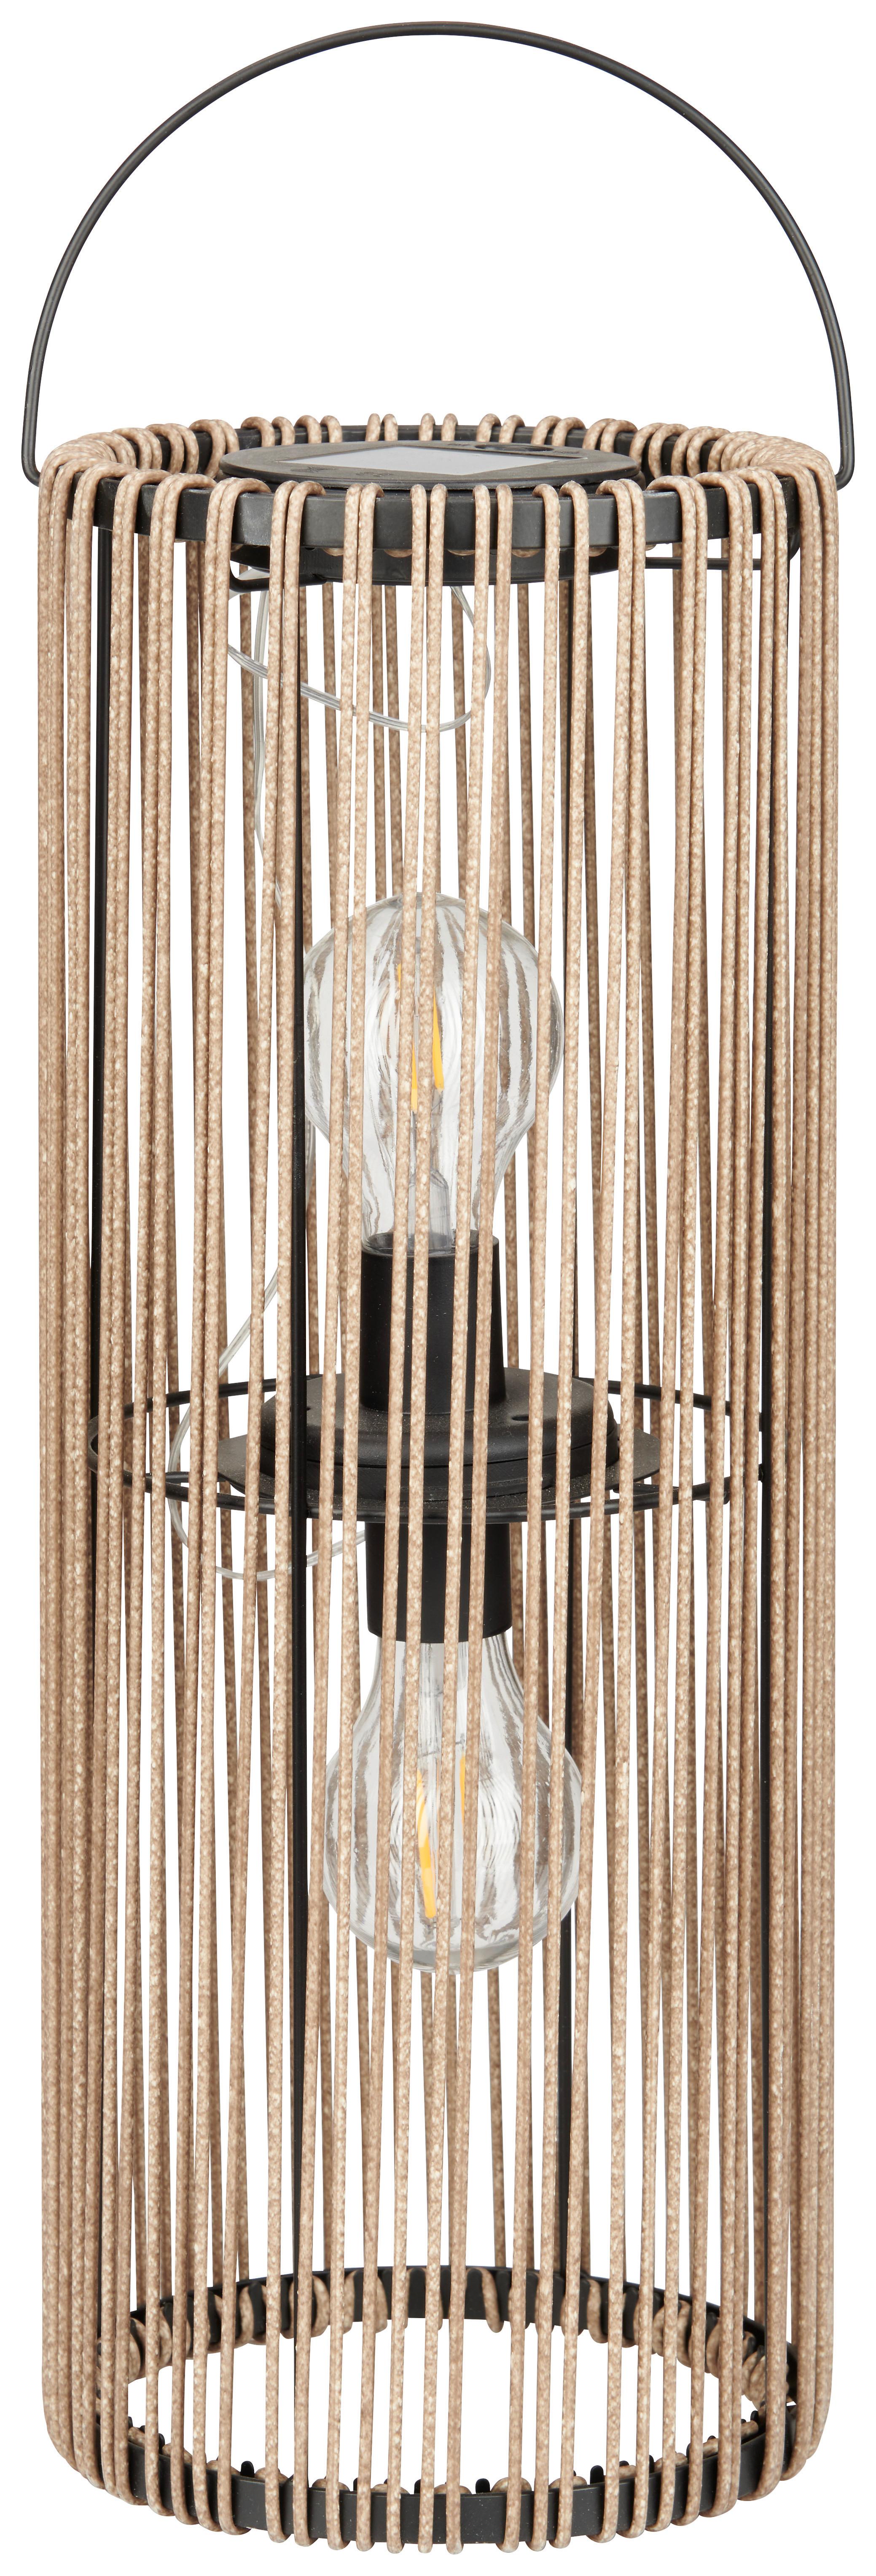 Lampă solară Laurin - maro, Modern, plastic/metal (16/50cm) - Modern Living